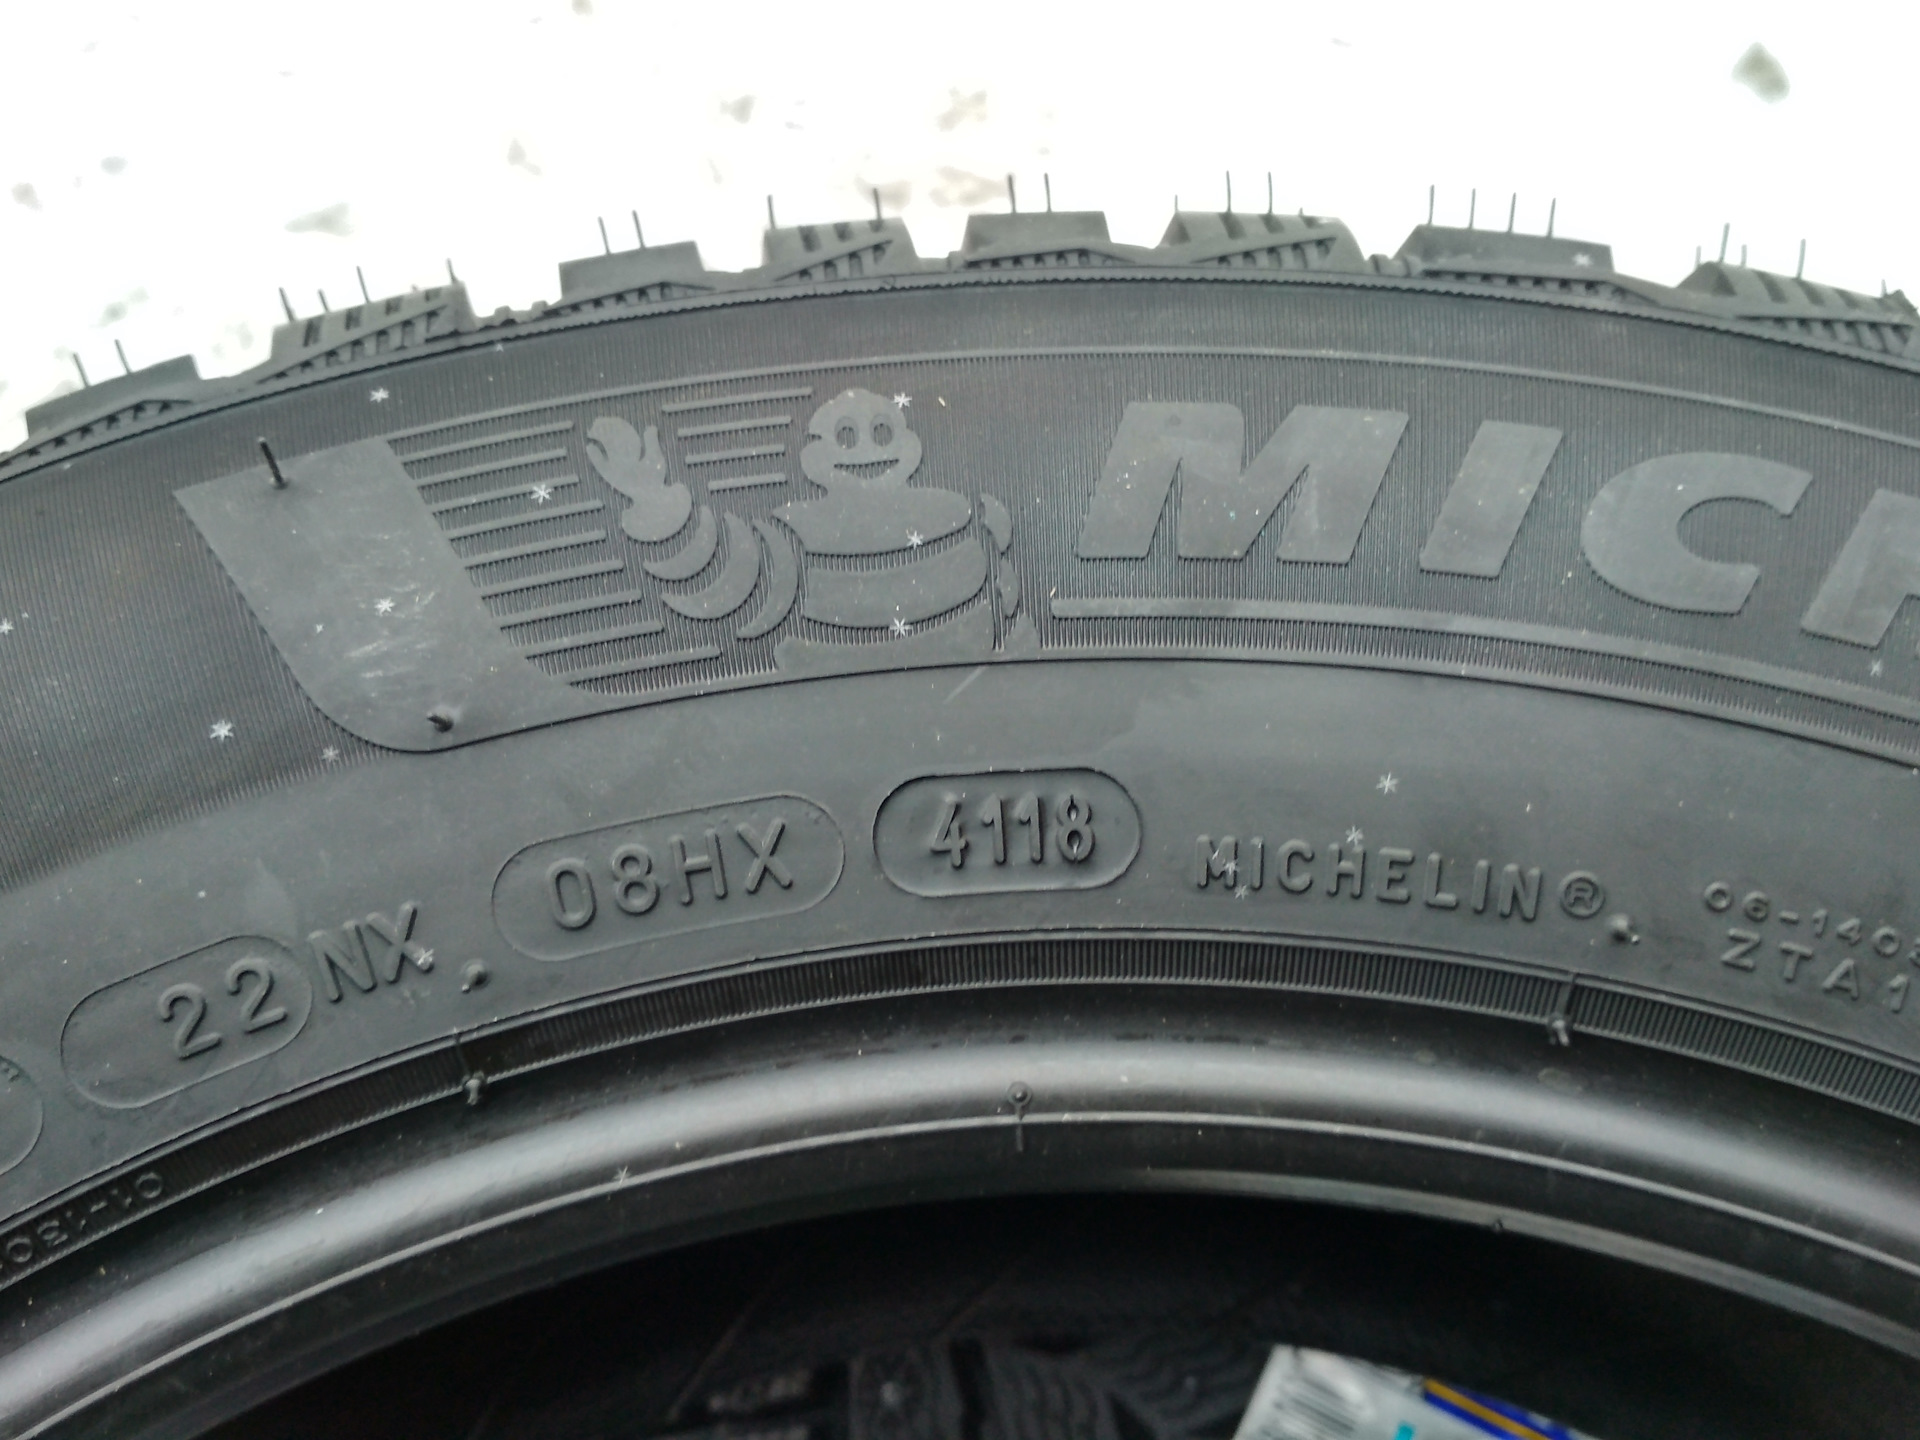 Где на шинах указан год выпуска фото. Шины Мишлен Дата изготовления шин. Дата производства шины Michelin. Дата выпуска на шинах Мишлен. Шины Дата производства michelin08xx.